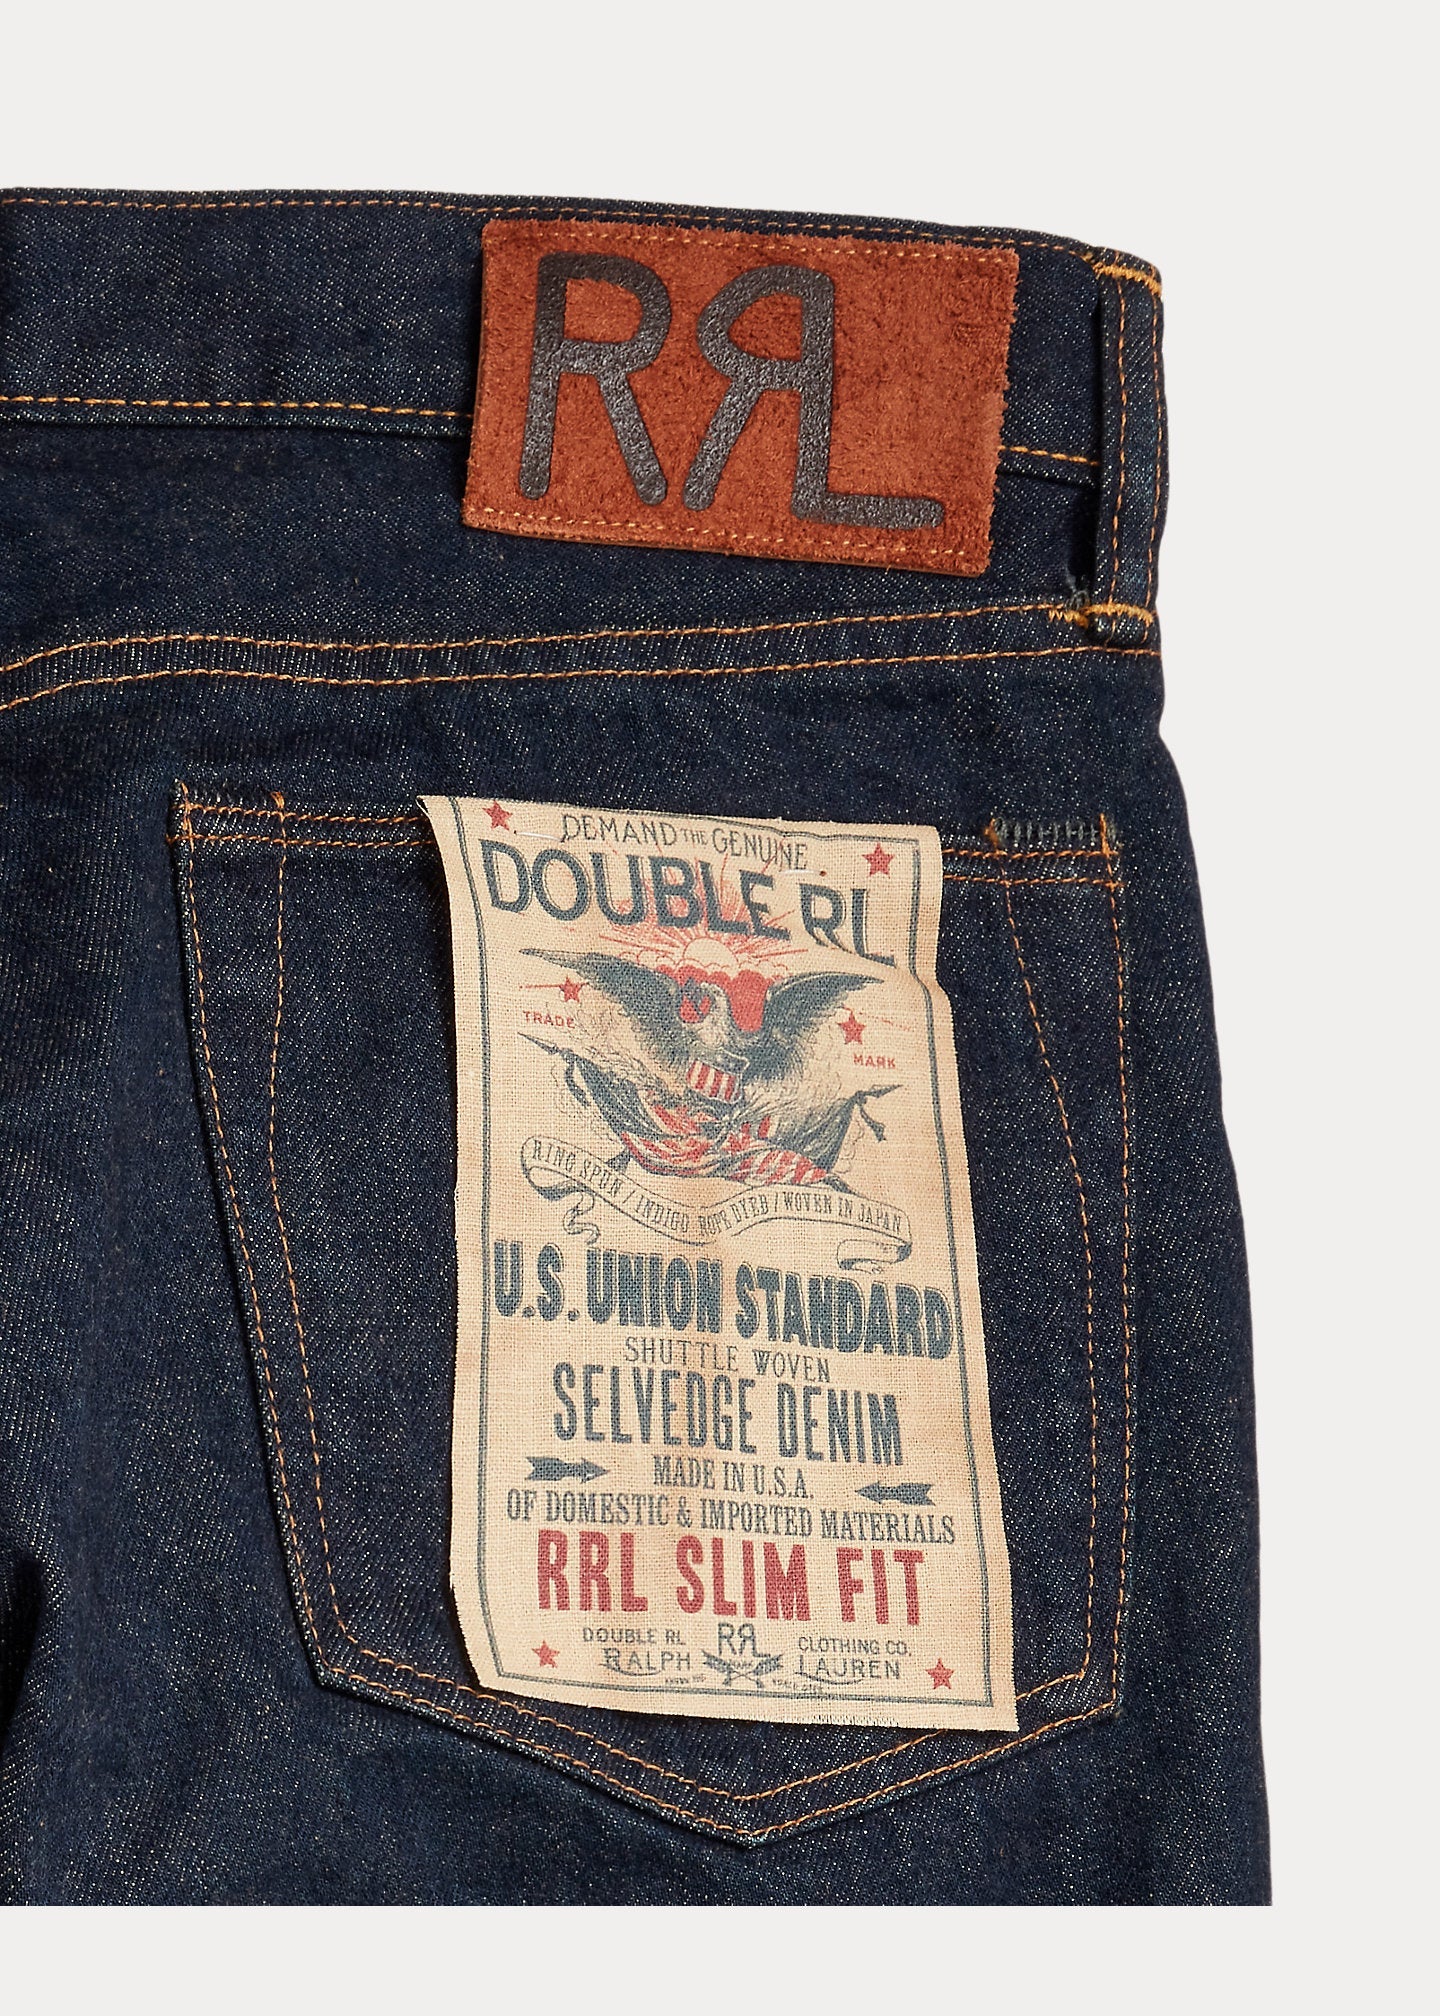 Double RL - Slim Fit Once-Washed Selvedge Jean - City Workshop Men's Supply Co.